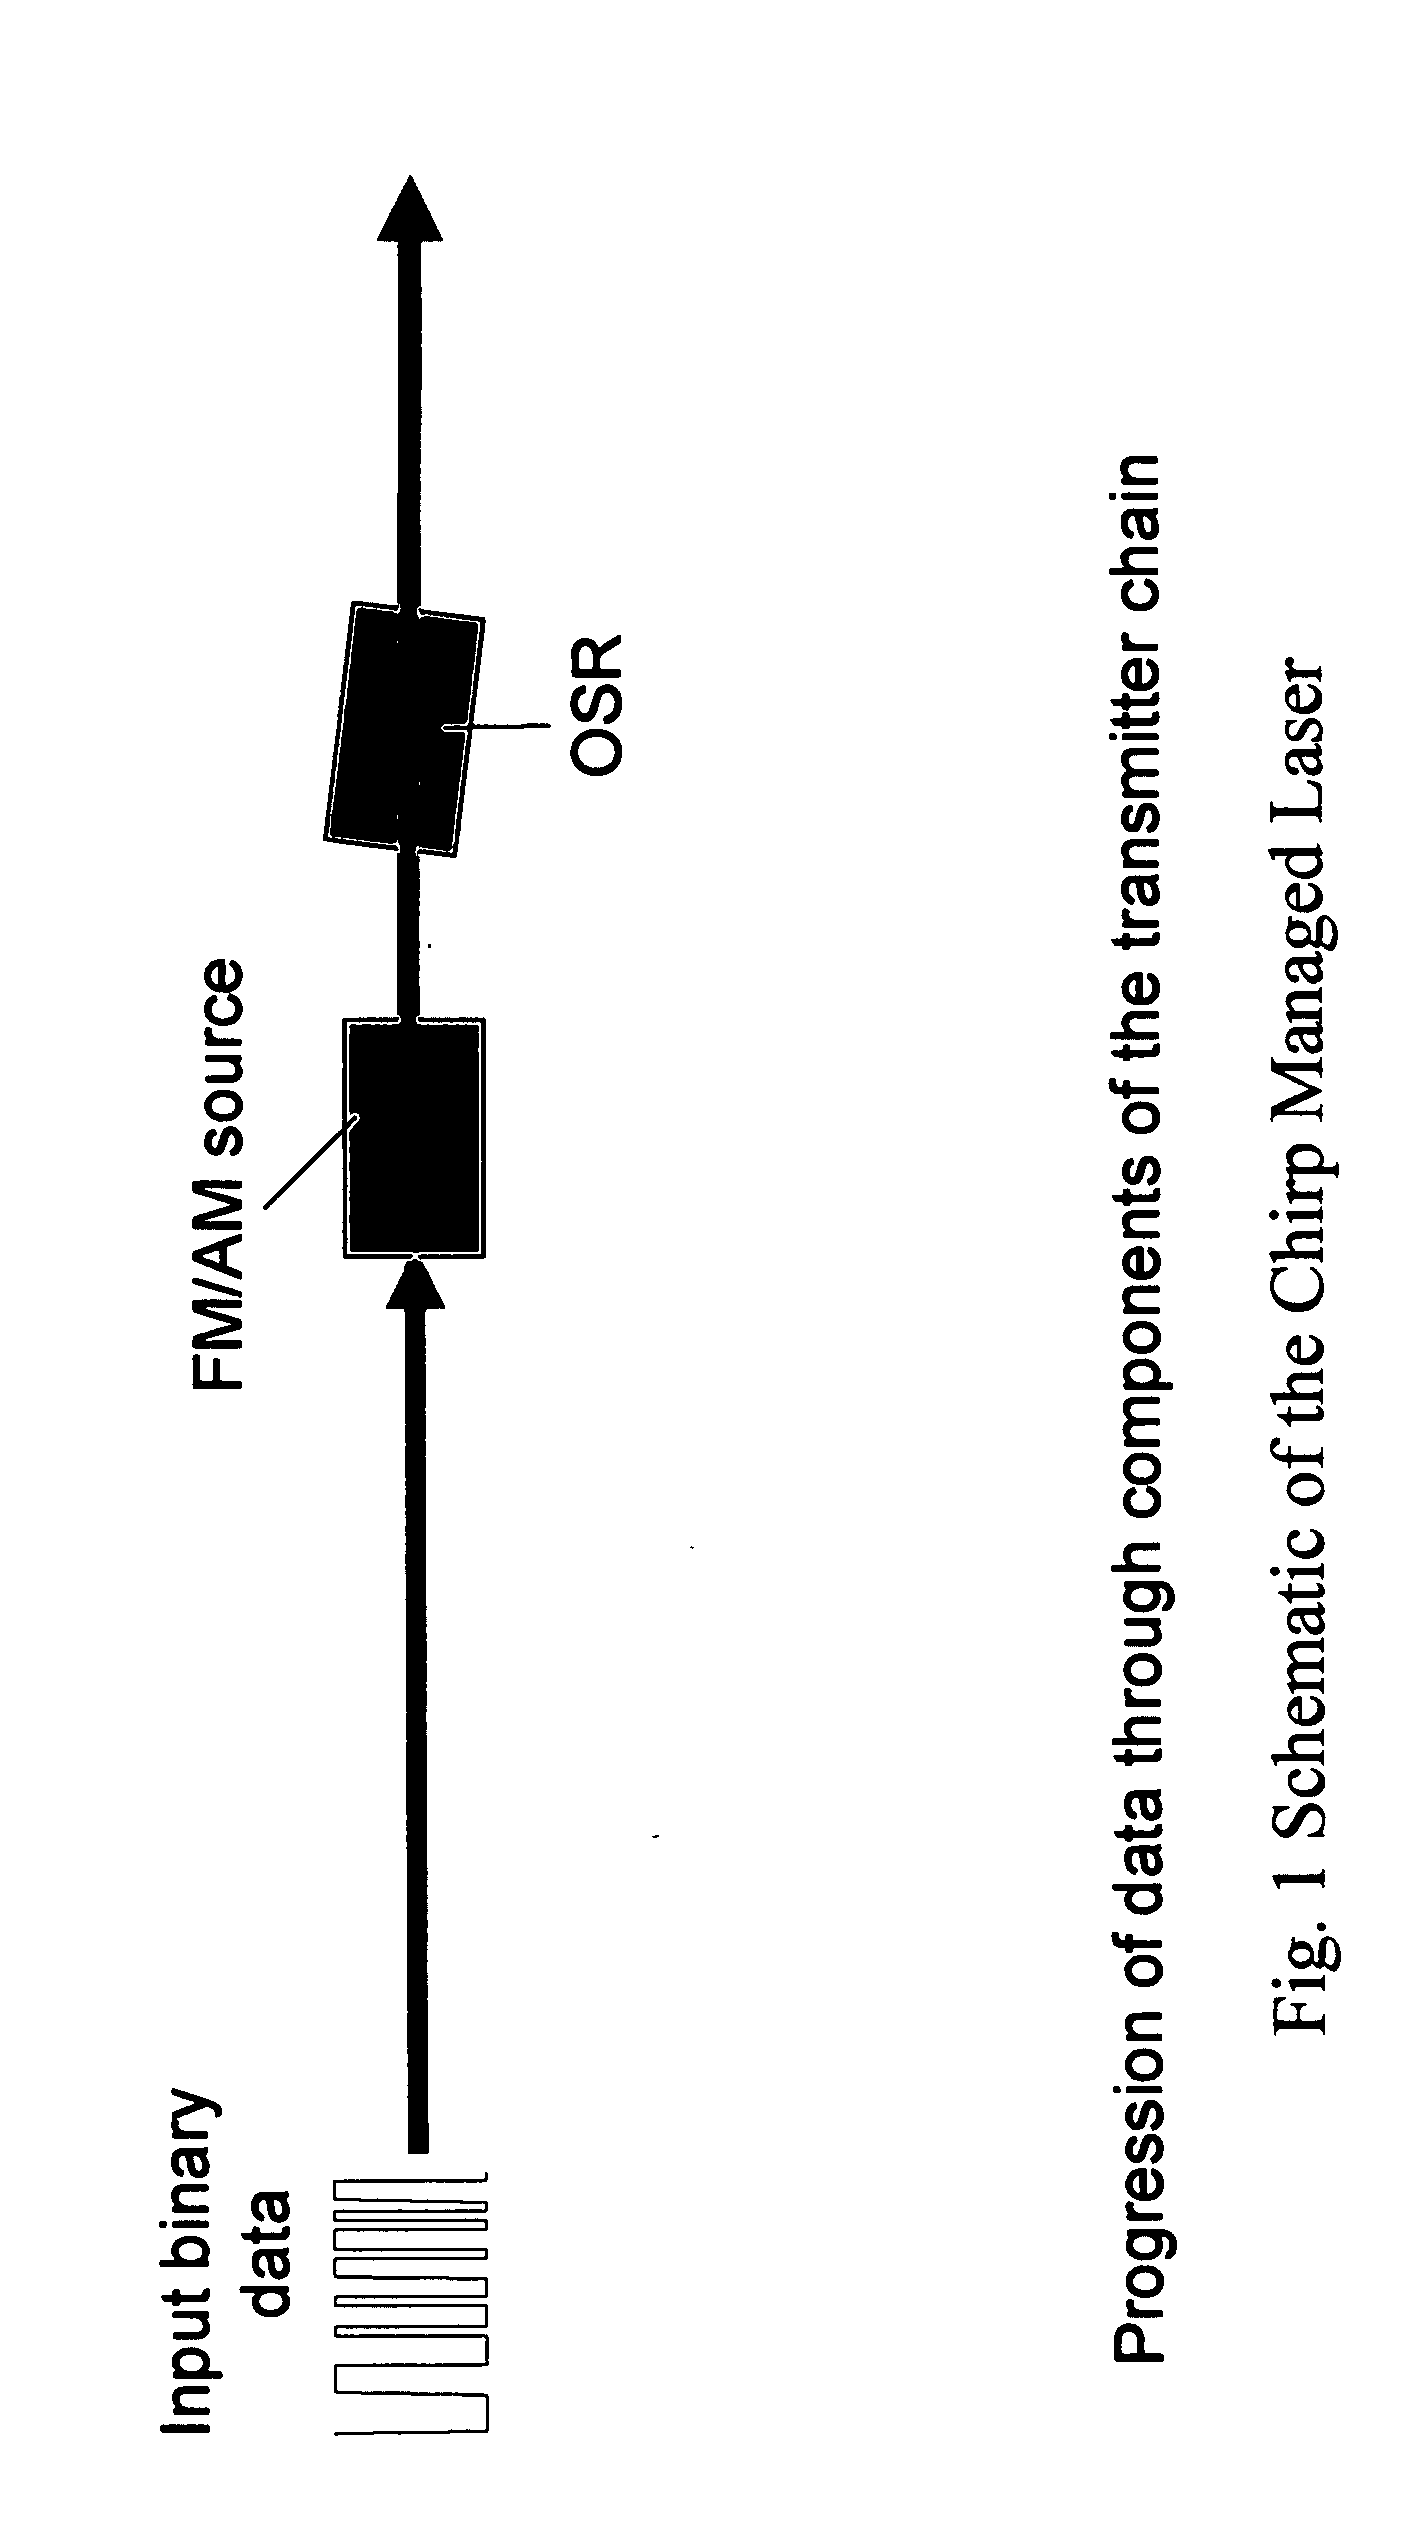 Optical transmission using semiconductor optical amplifier (SOA)